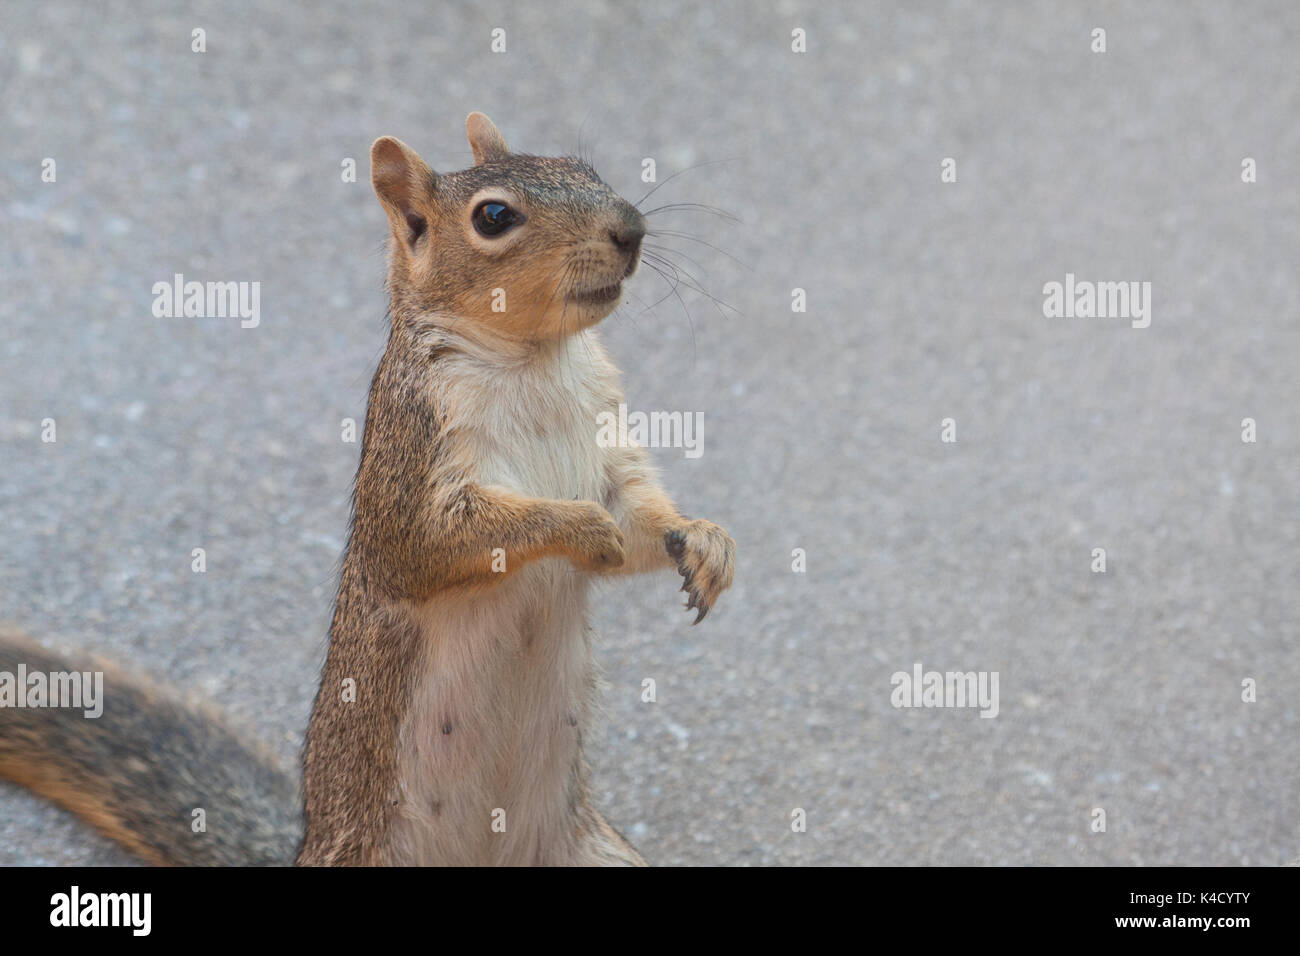 Closeup of a squirrel Stock Photo